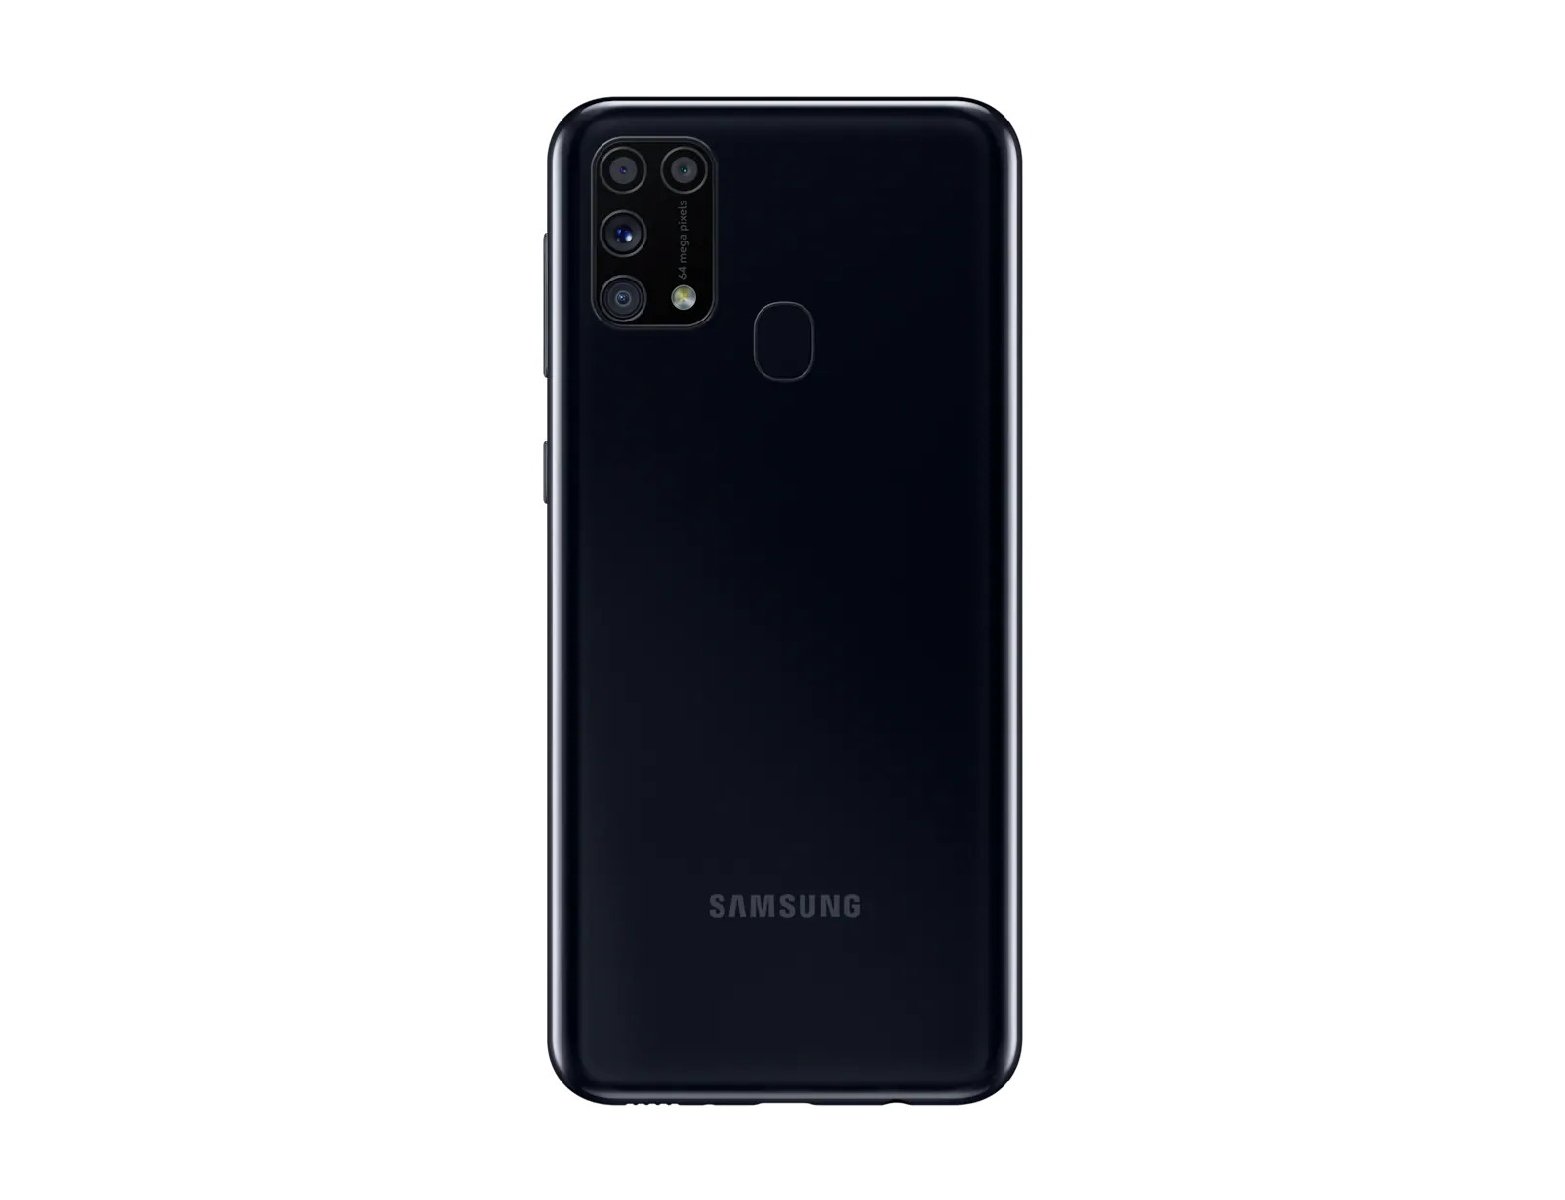 Купить Смартфон Samsung M31s 6 128gb